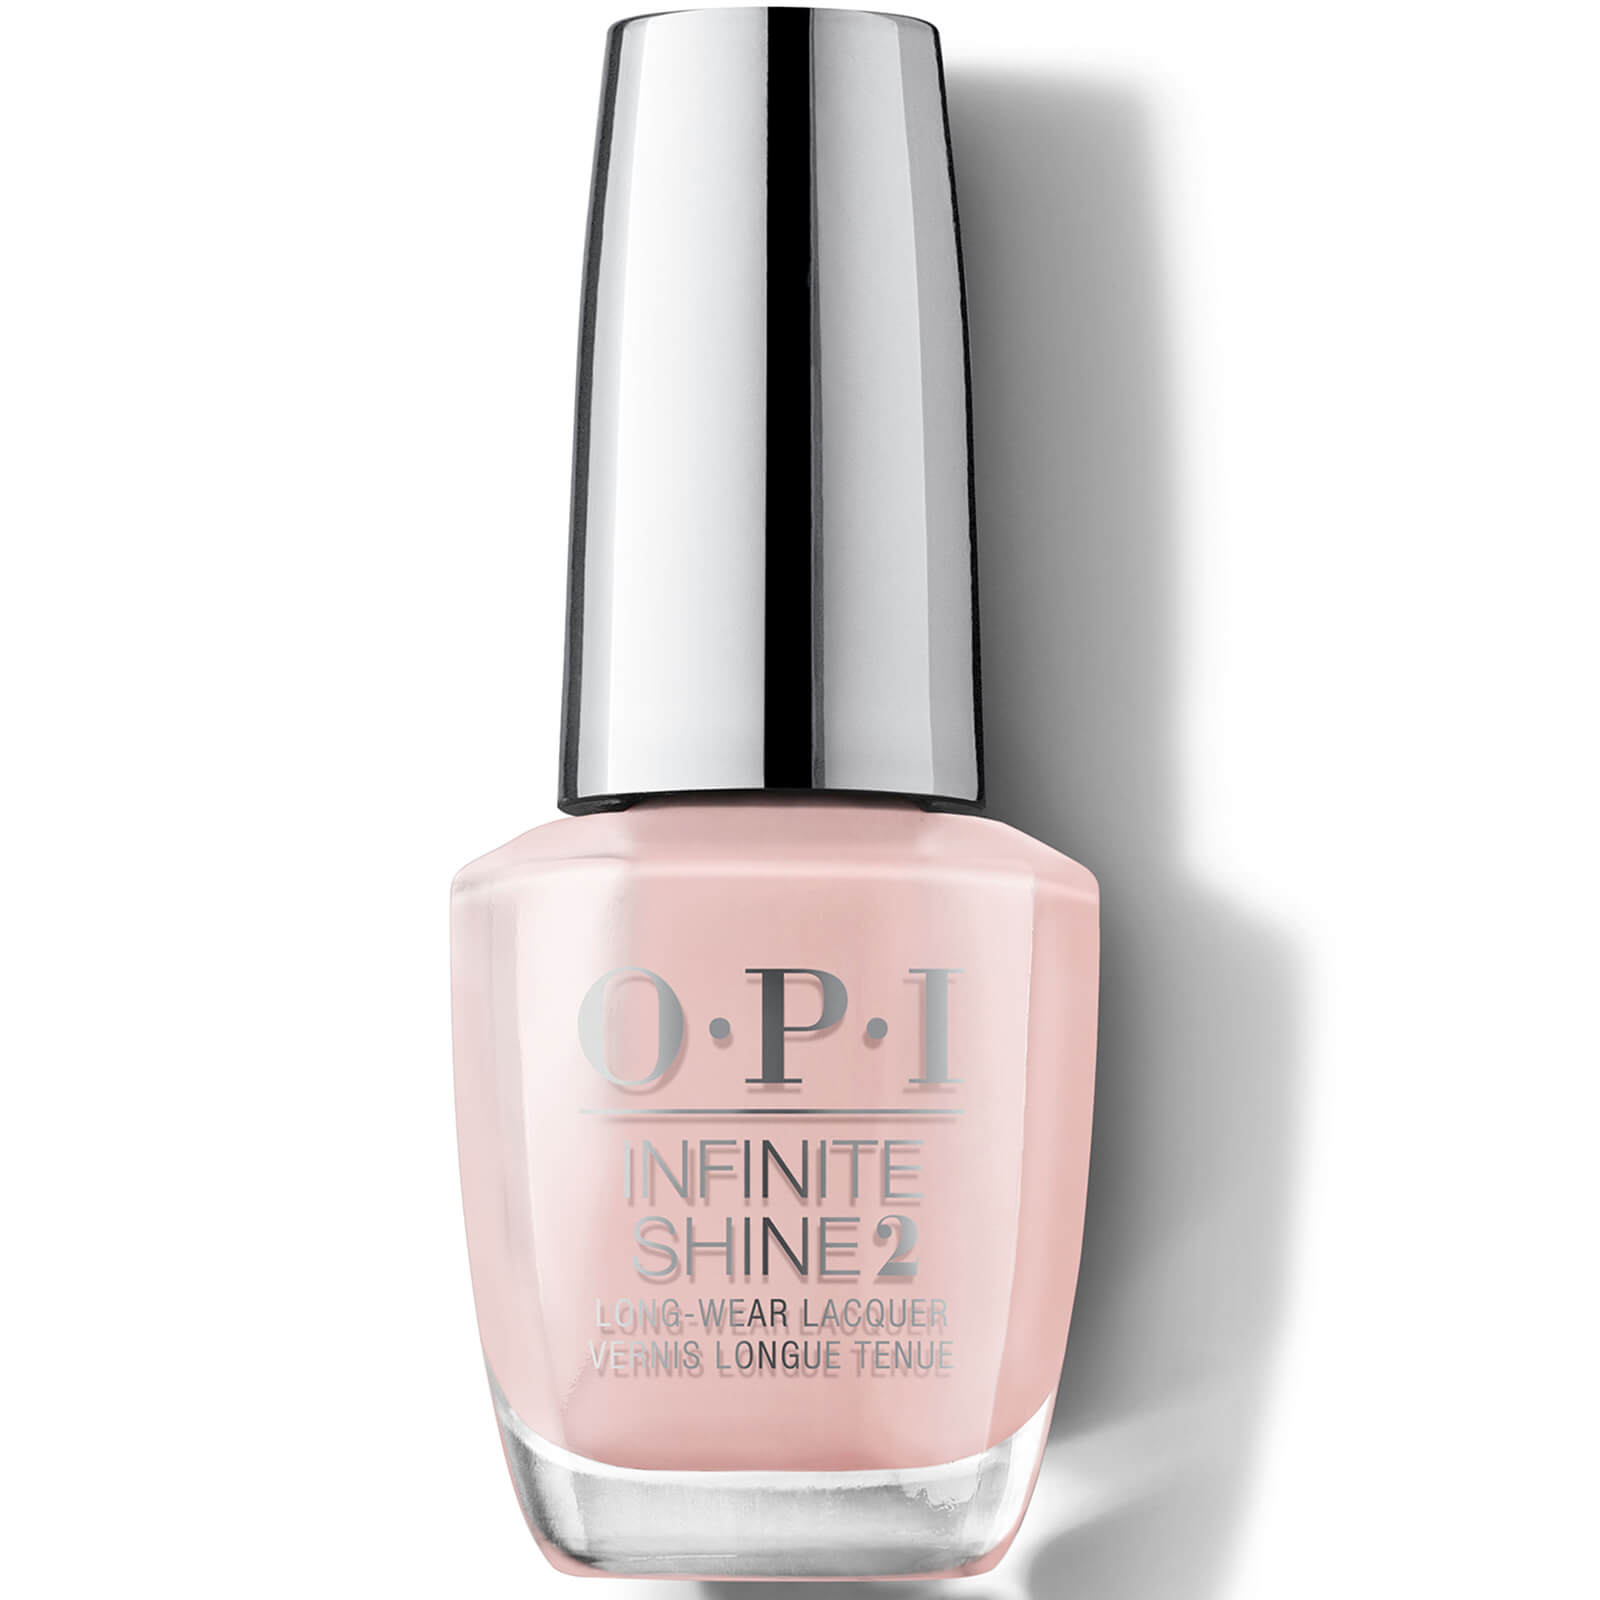 Opi Infinite Shine Long-wear Nail Polish - Passion 15ml In Passion              